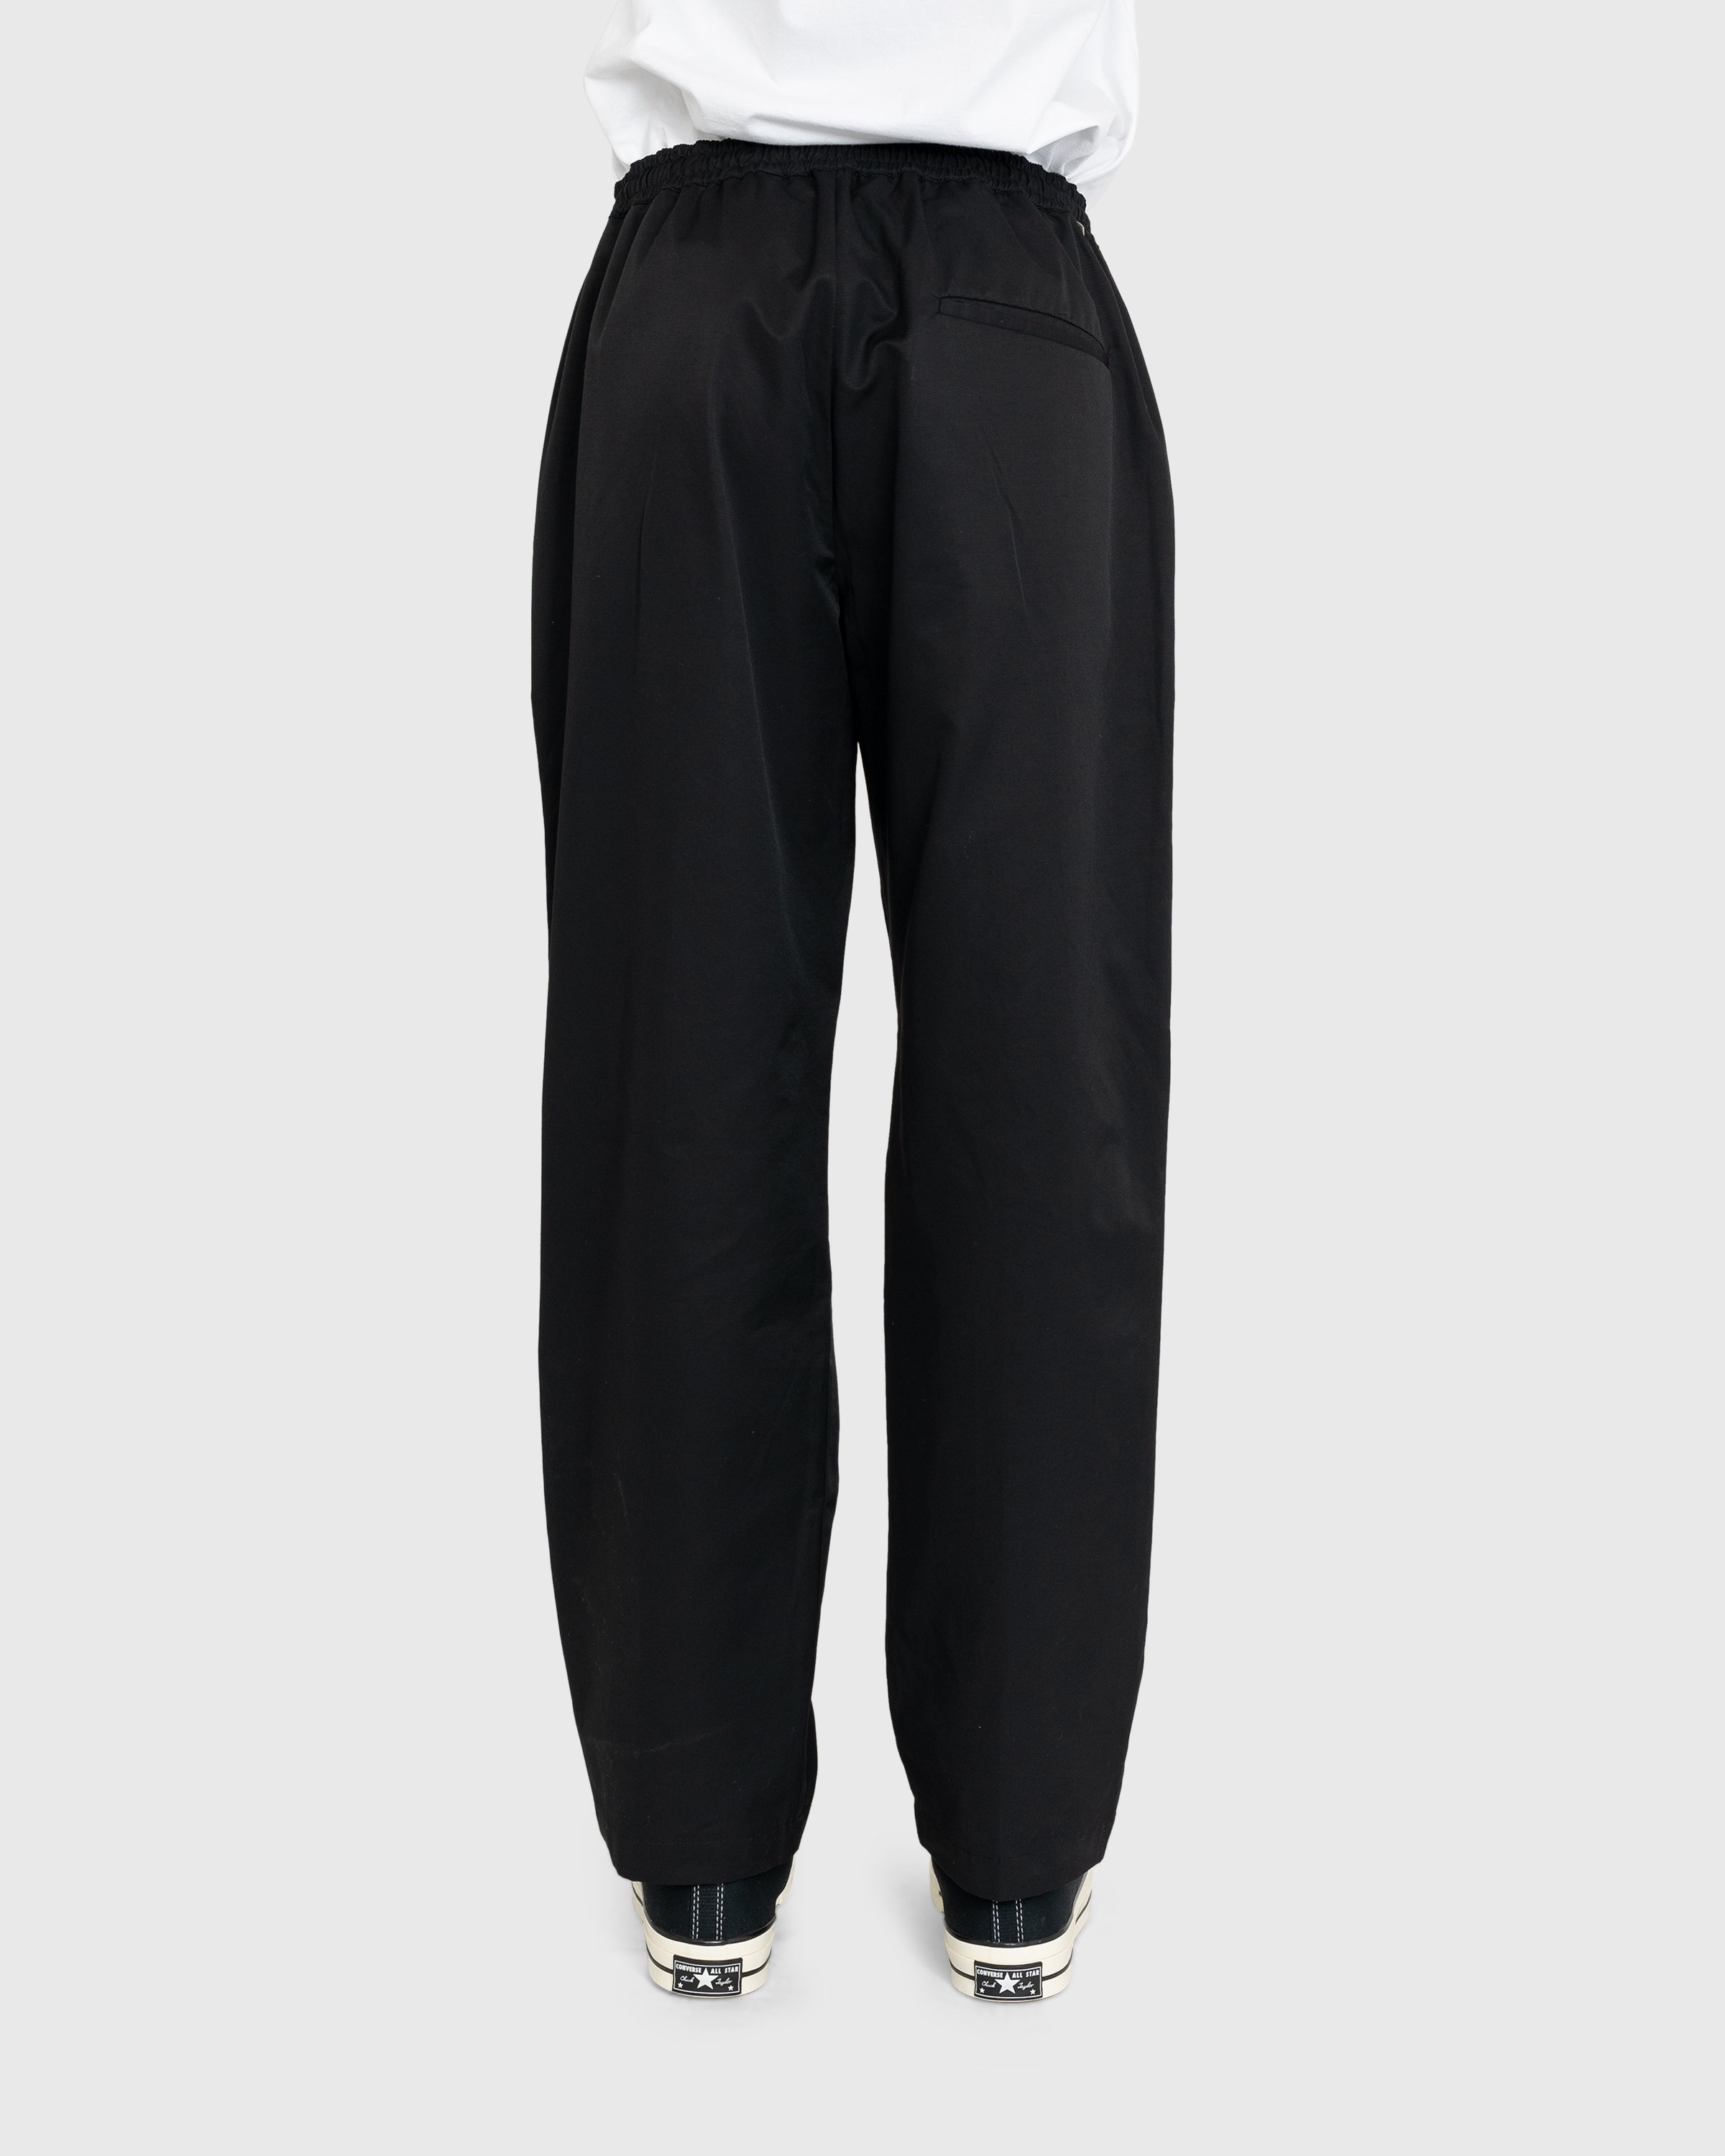 Highsnobiety – Cotton Nylon Elastic Pants Black - Pants - Black - Image 3